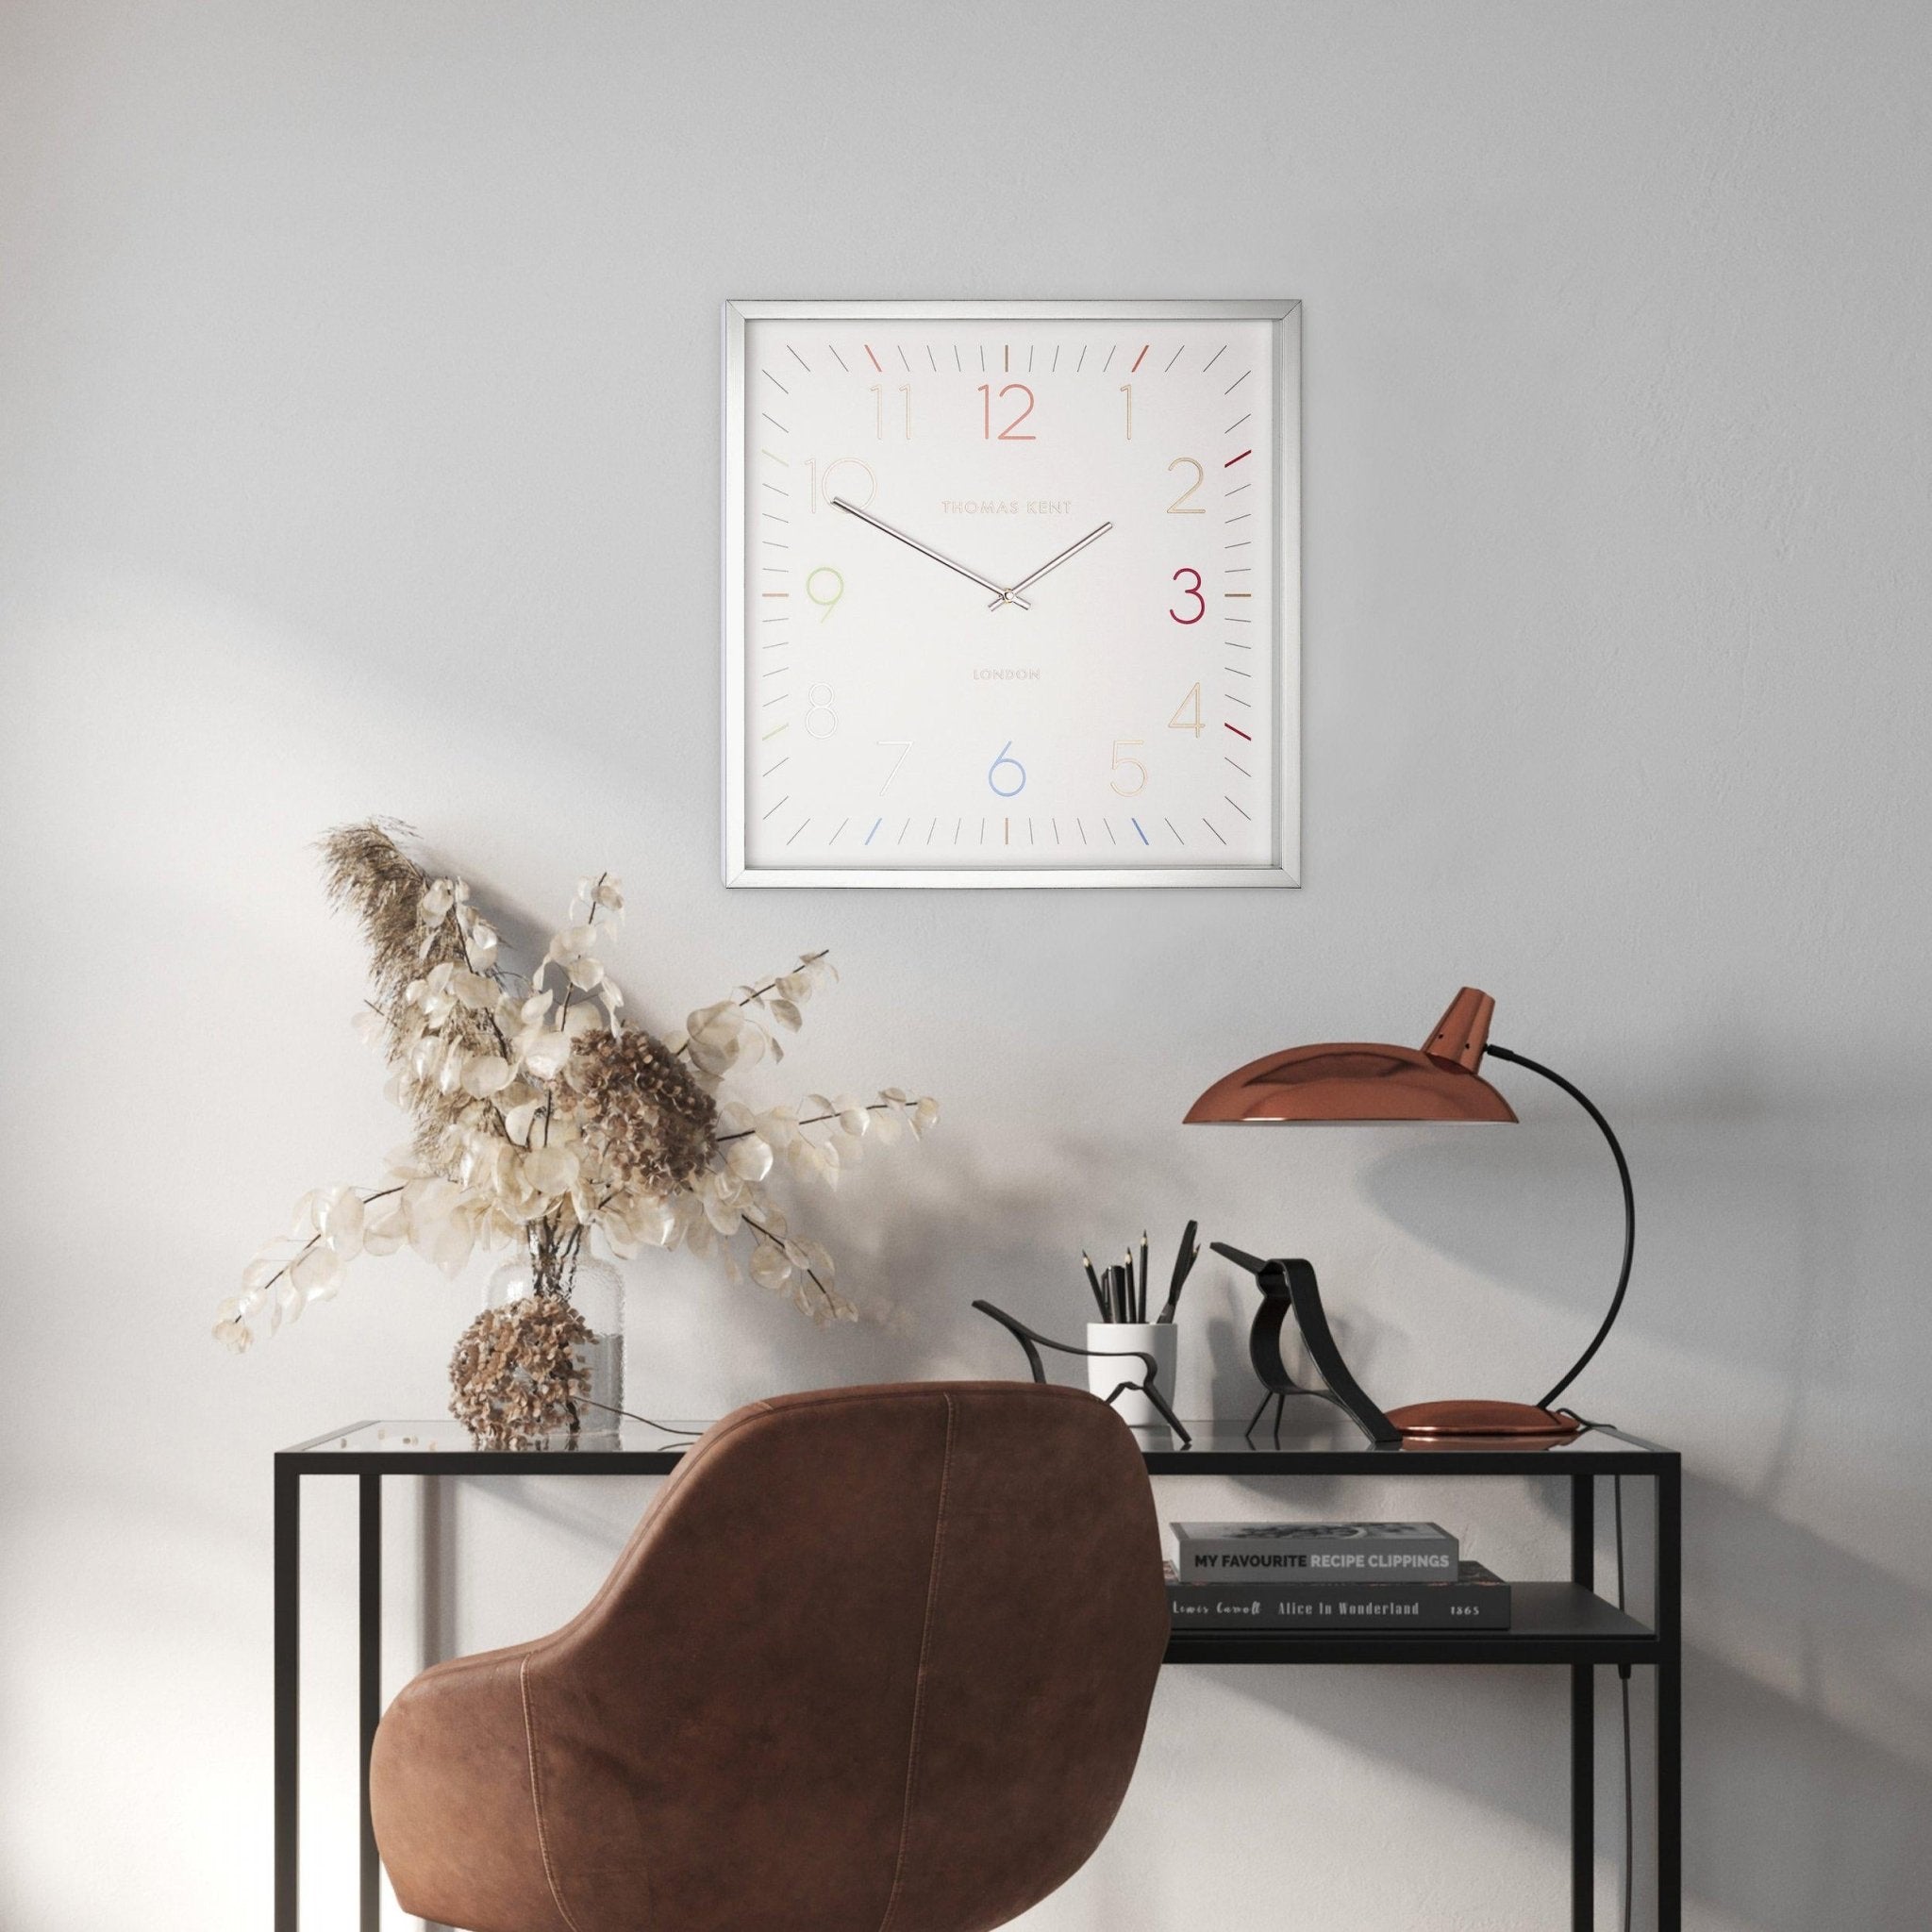 Thomas Kent Editor Square Wall Clock (50cm/20") - Duck Barn Interiors